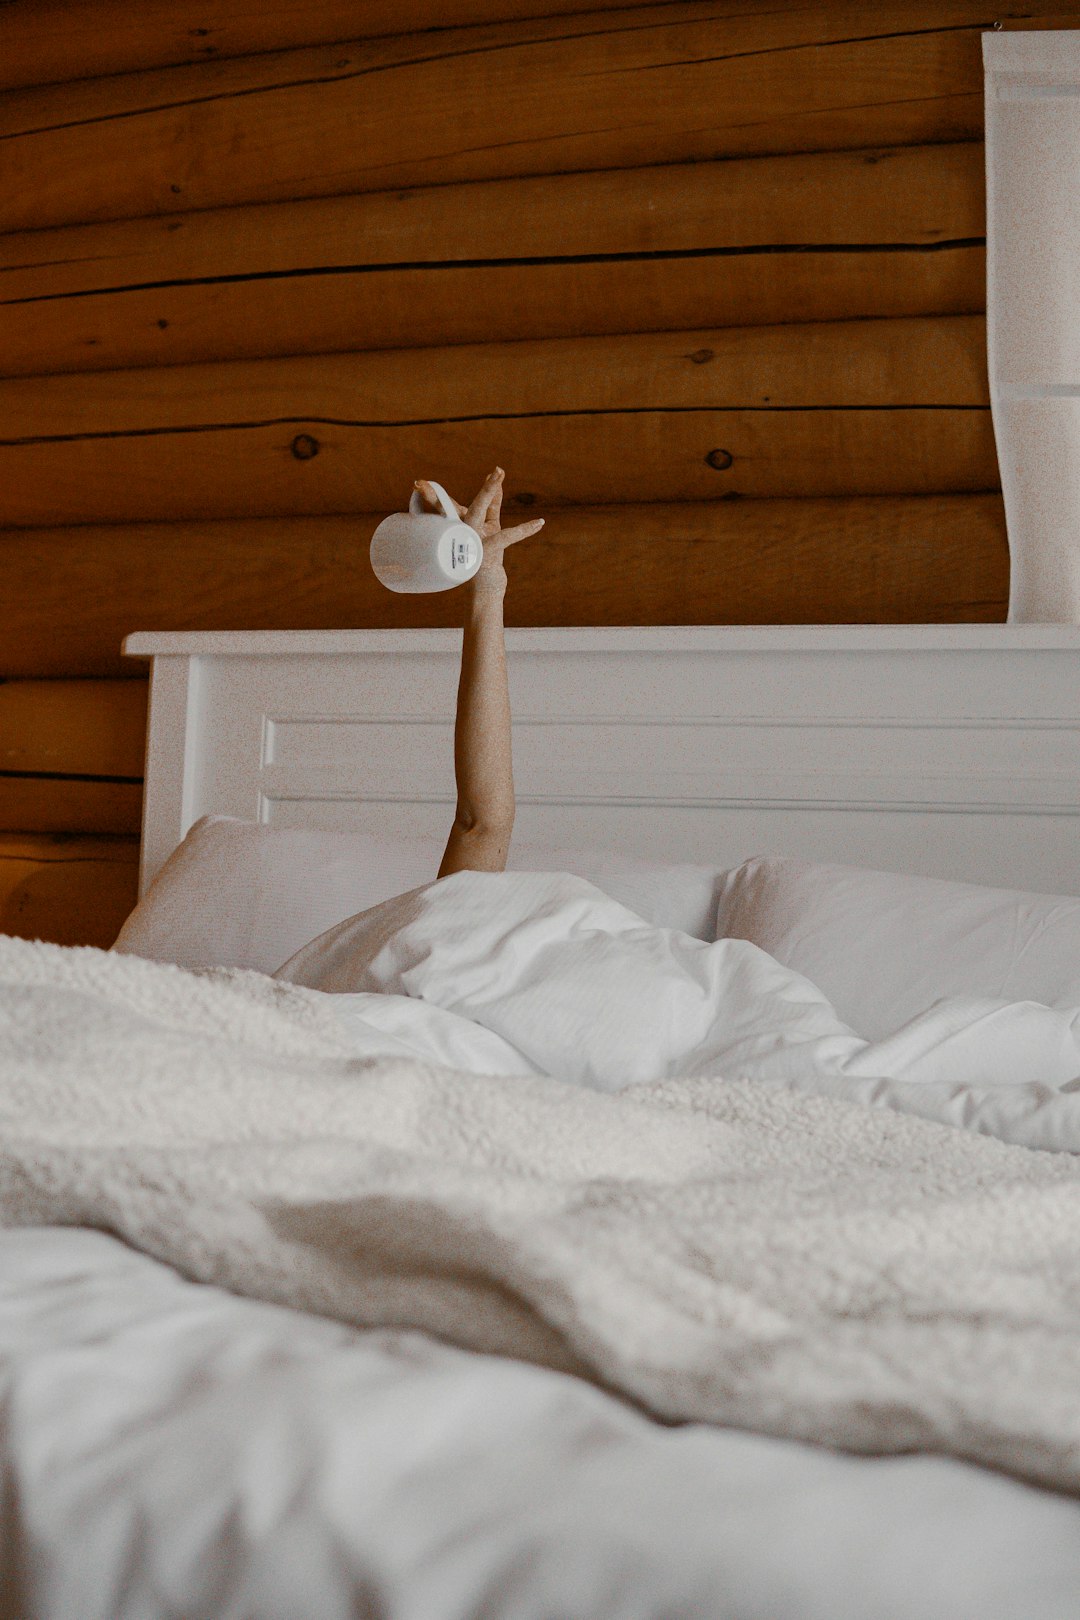 white bed linen near brown wooden headboard